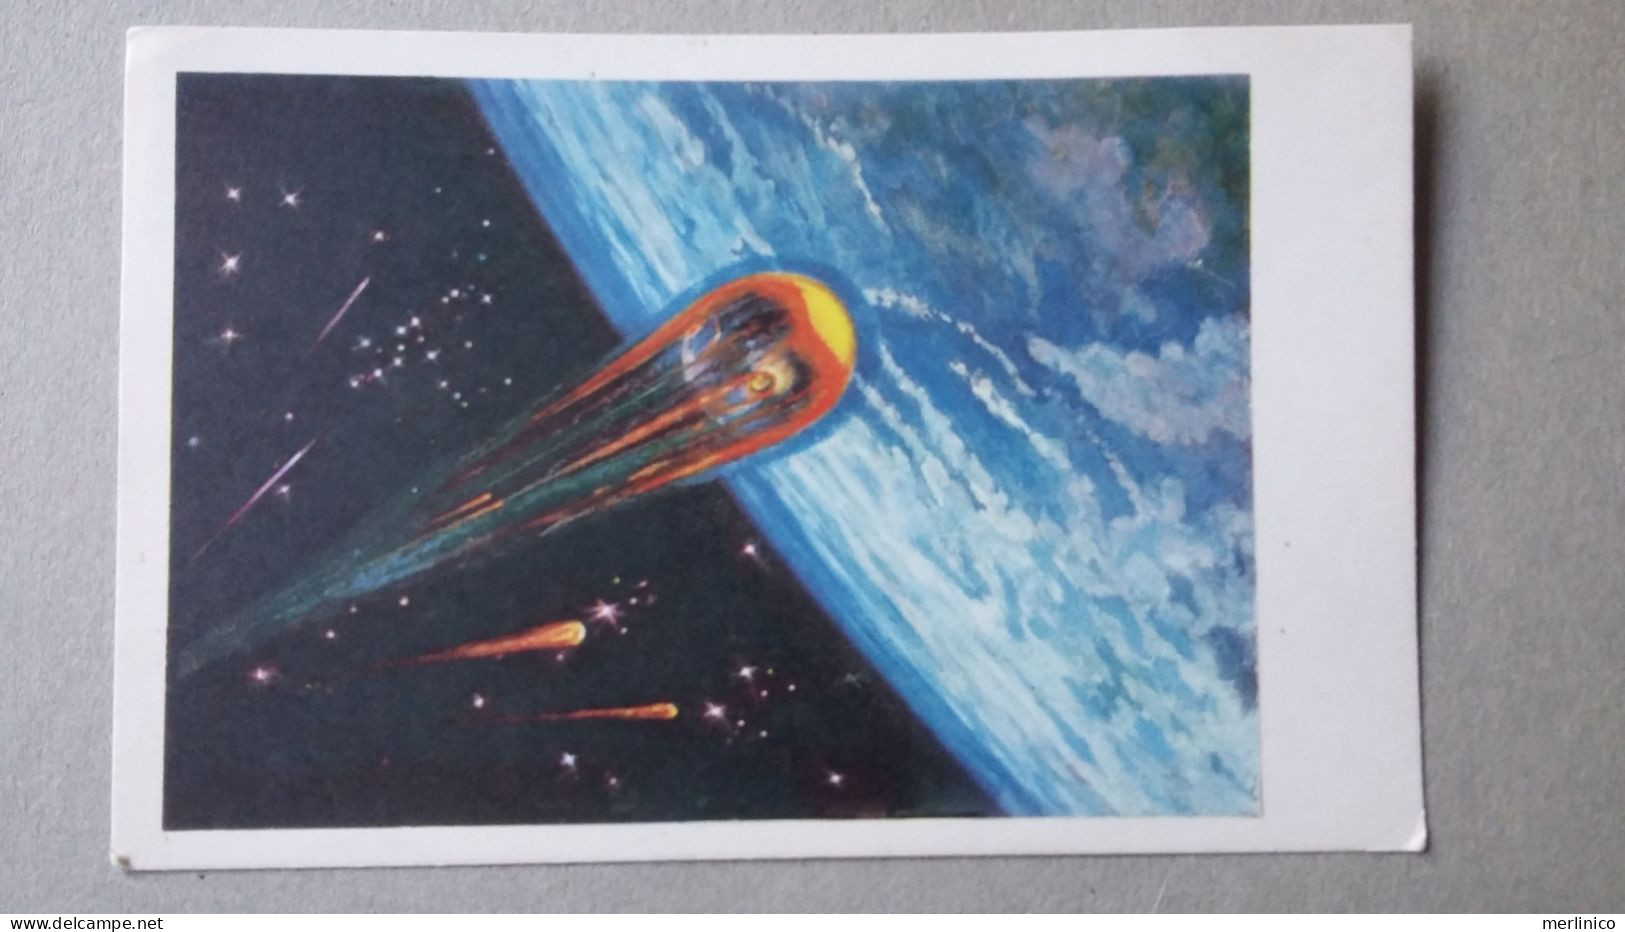 Space, Soviet Union, vintage 1969, 11 postcards